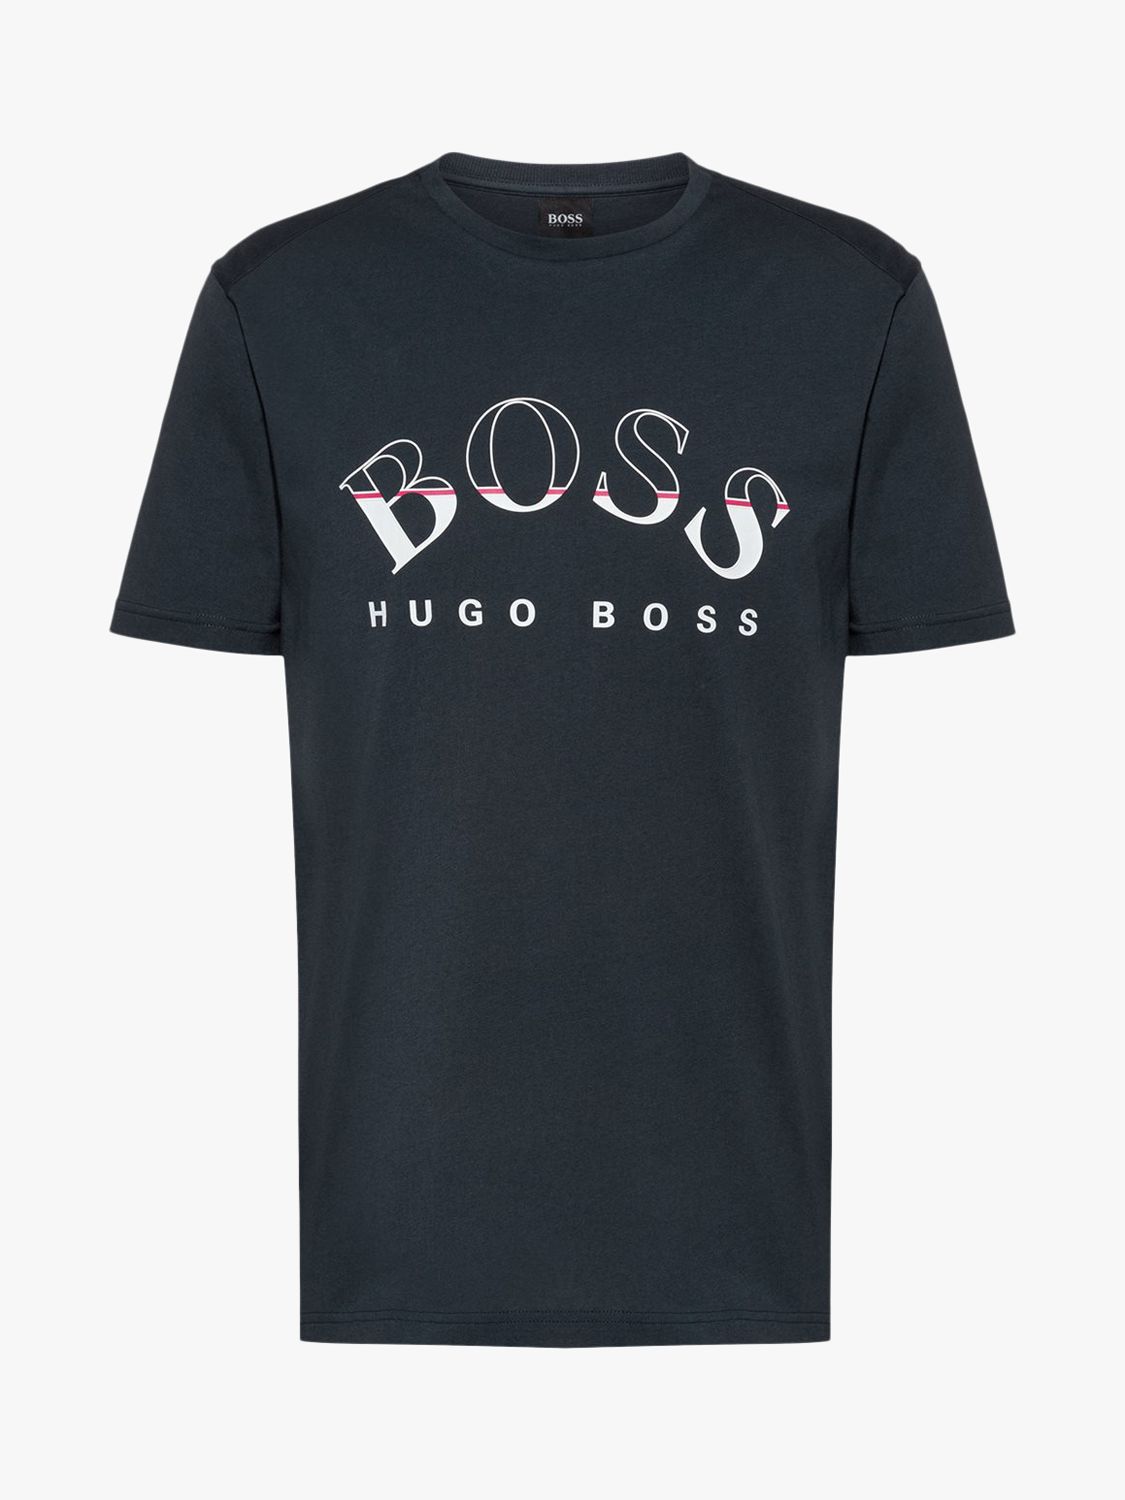 BOSS Tee 1 Cotton Logo T-Shirt, Navy at 